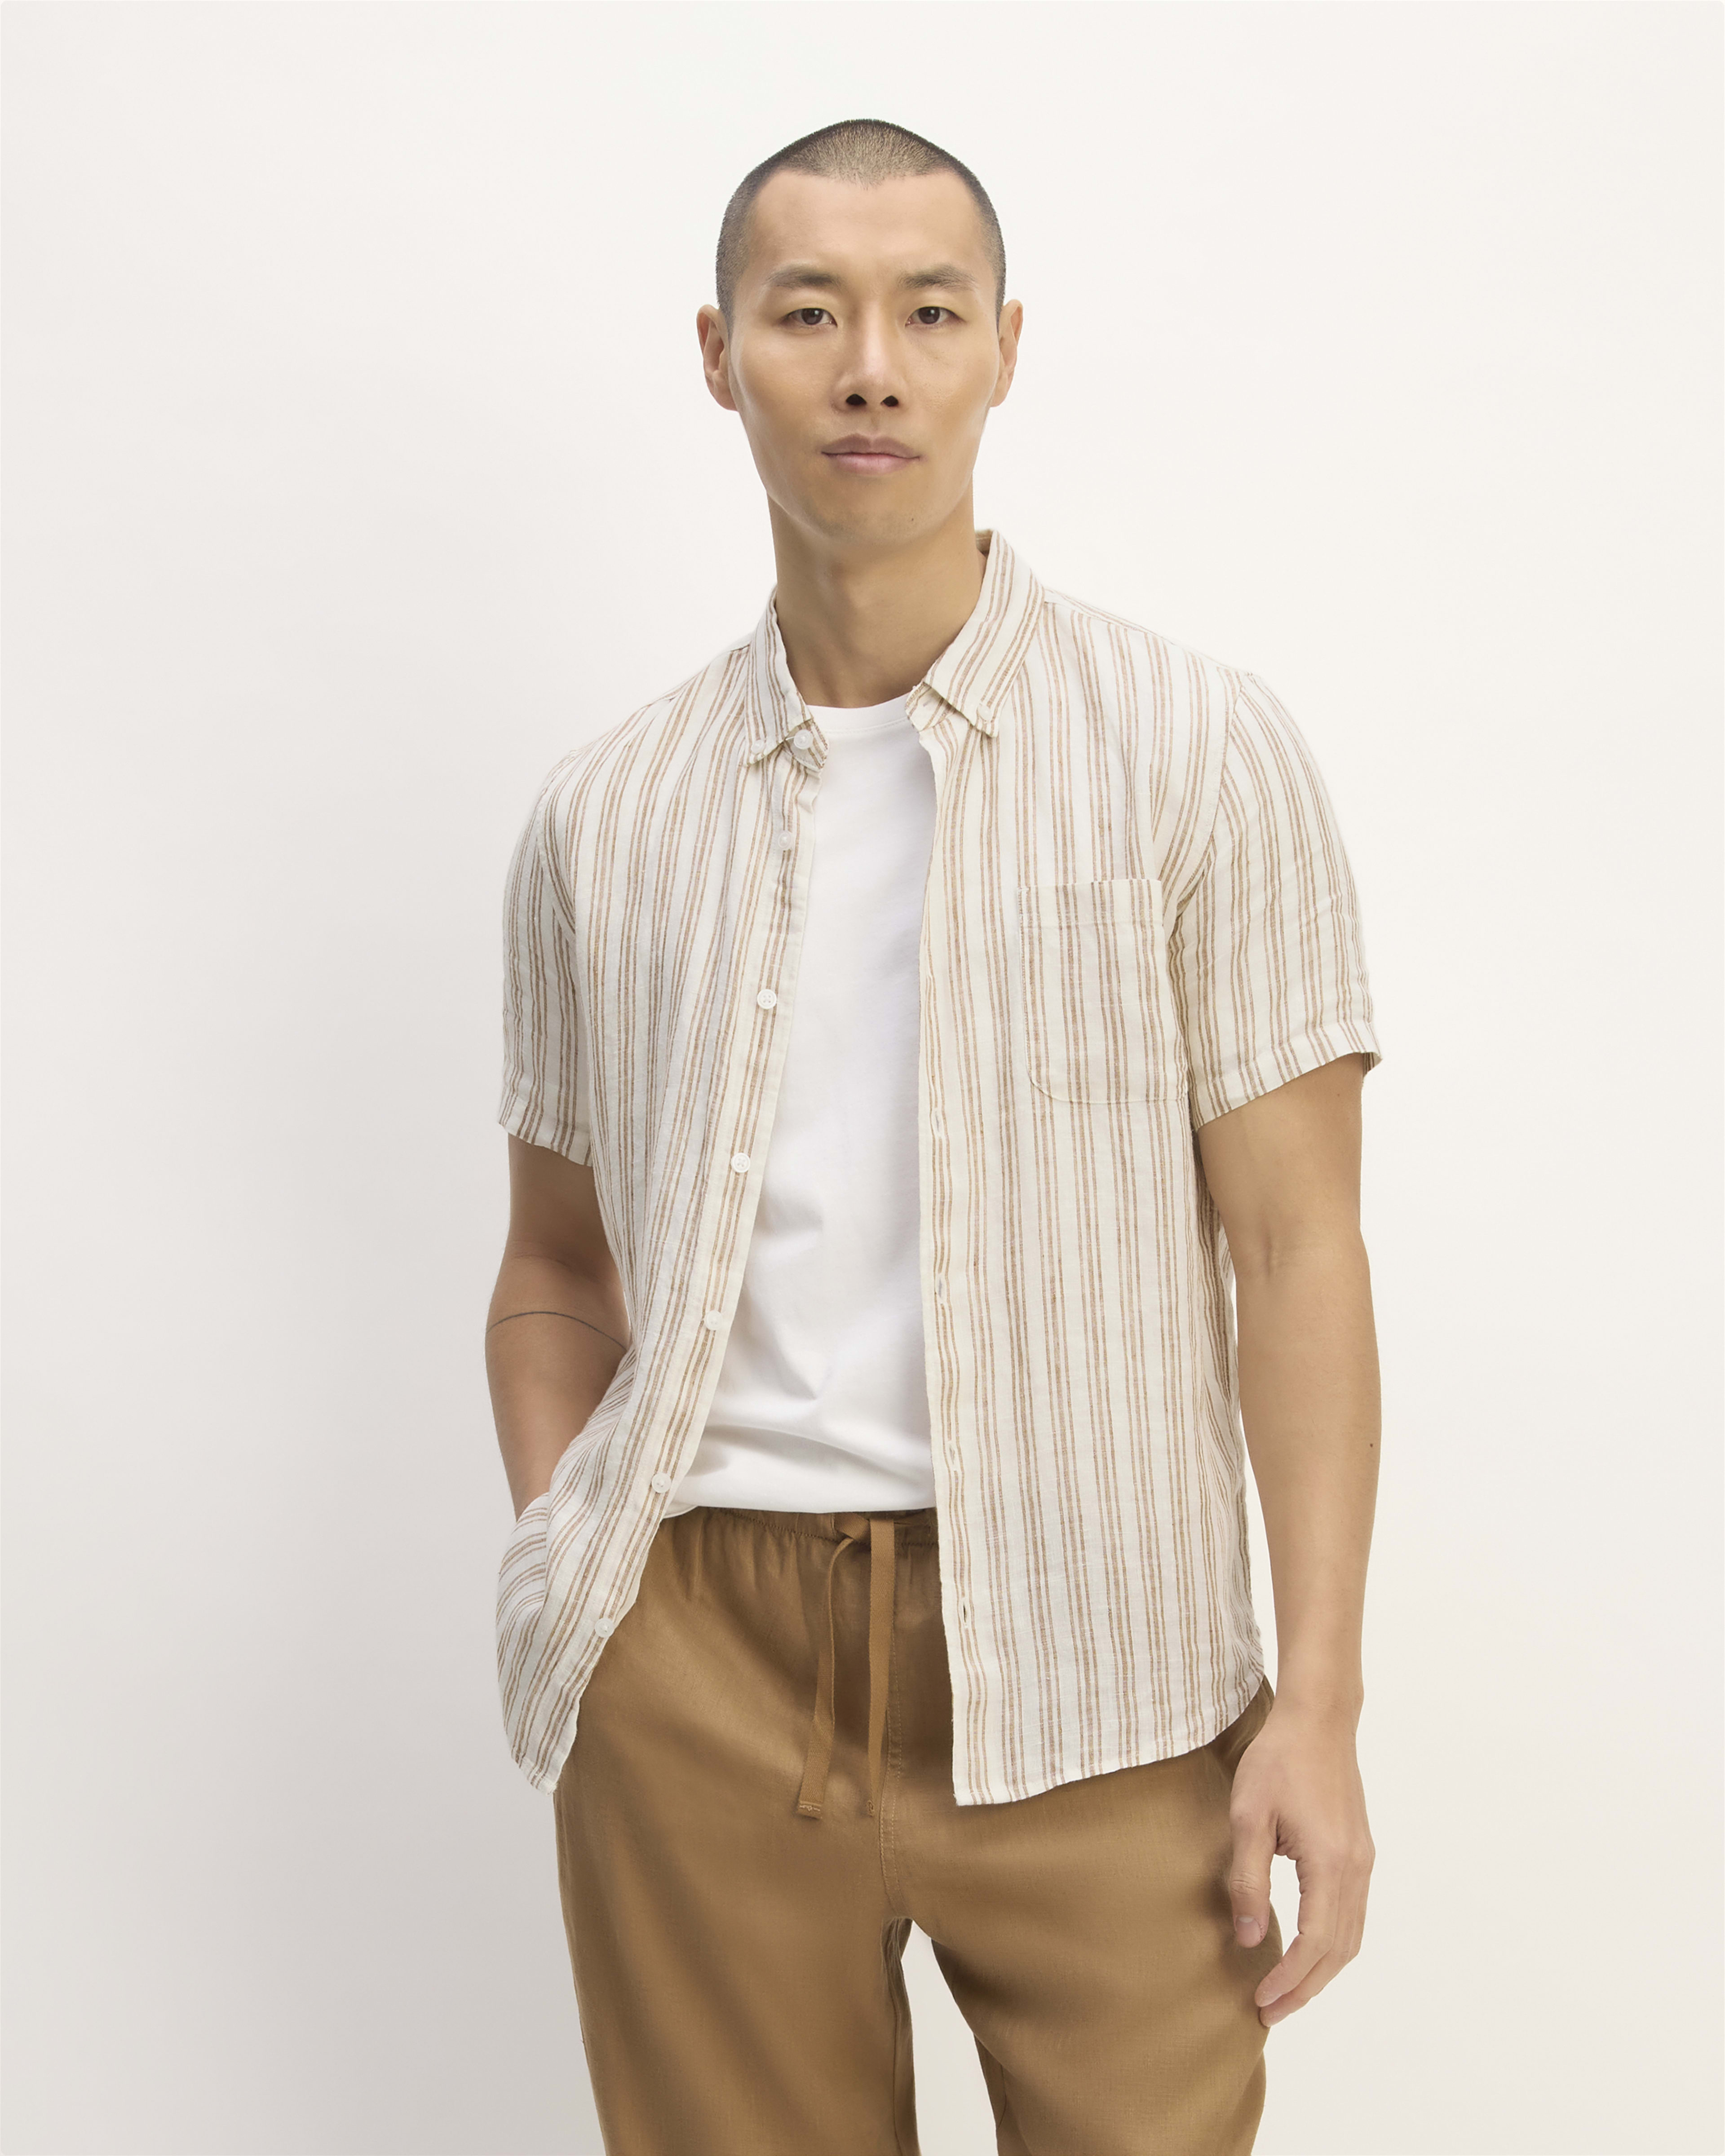 Mens Linen Shirt Tall, Shirts for Men Fashion Button Down Linen